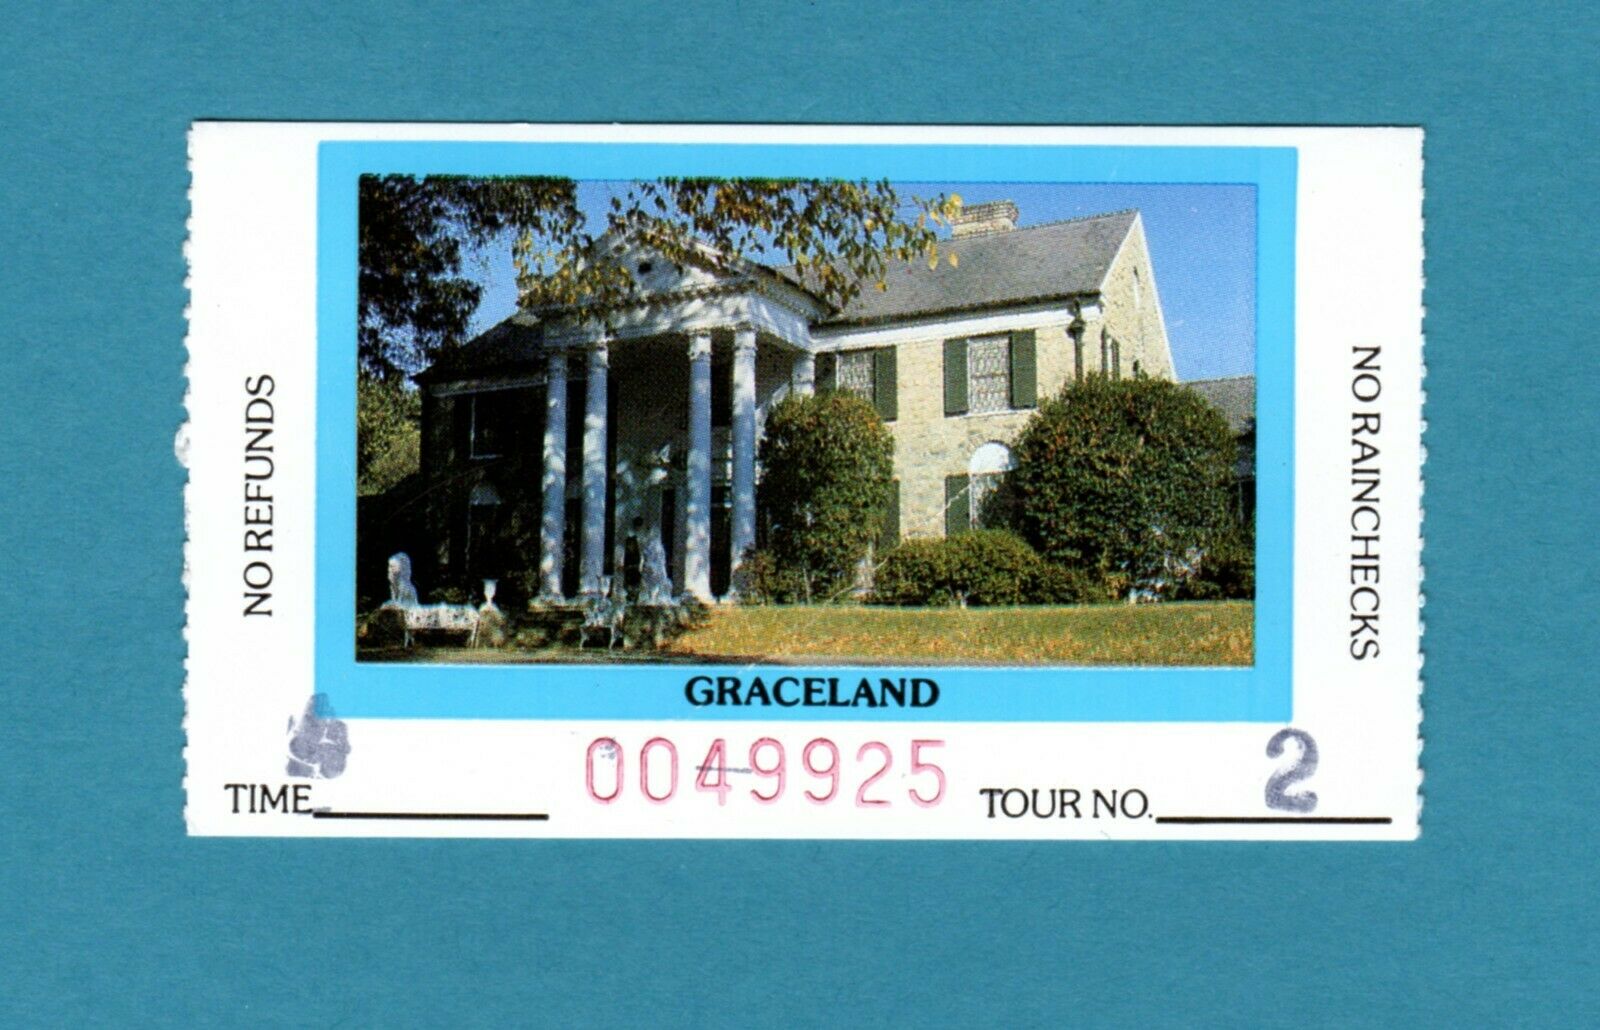 Elvis Presley Graceland Tour Ticket Stub